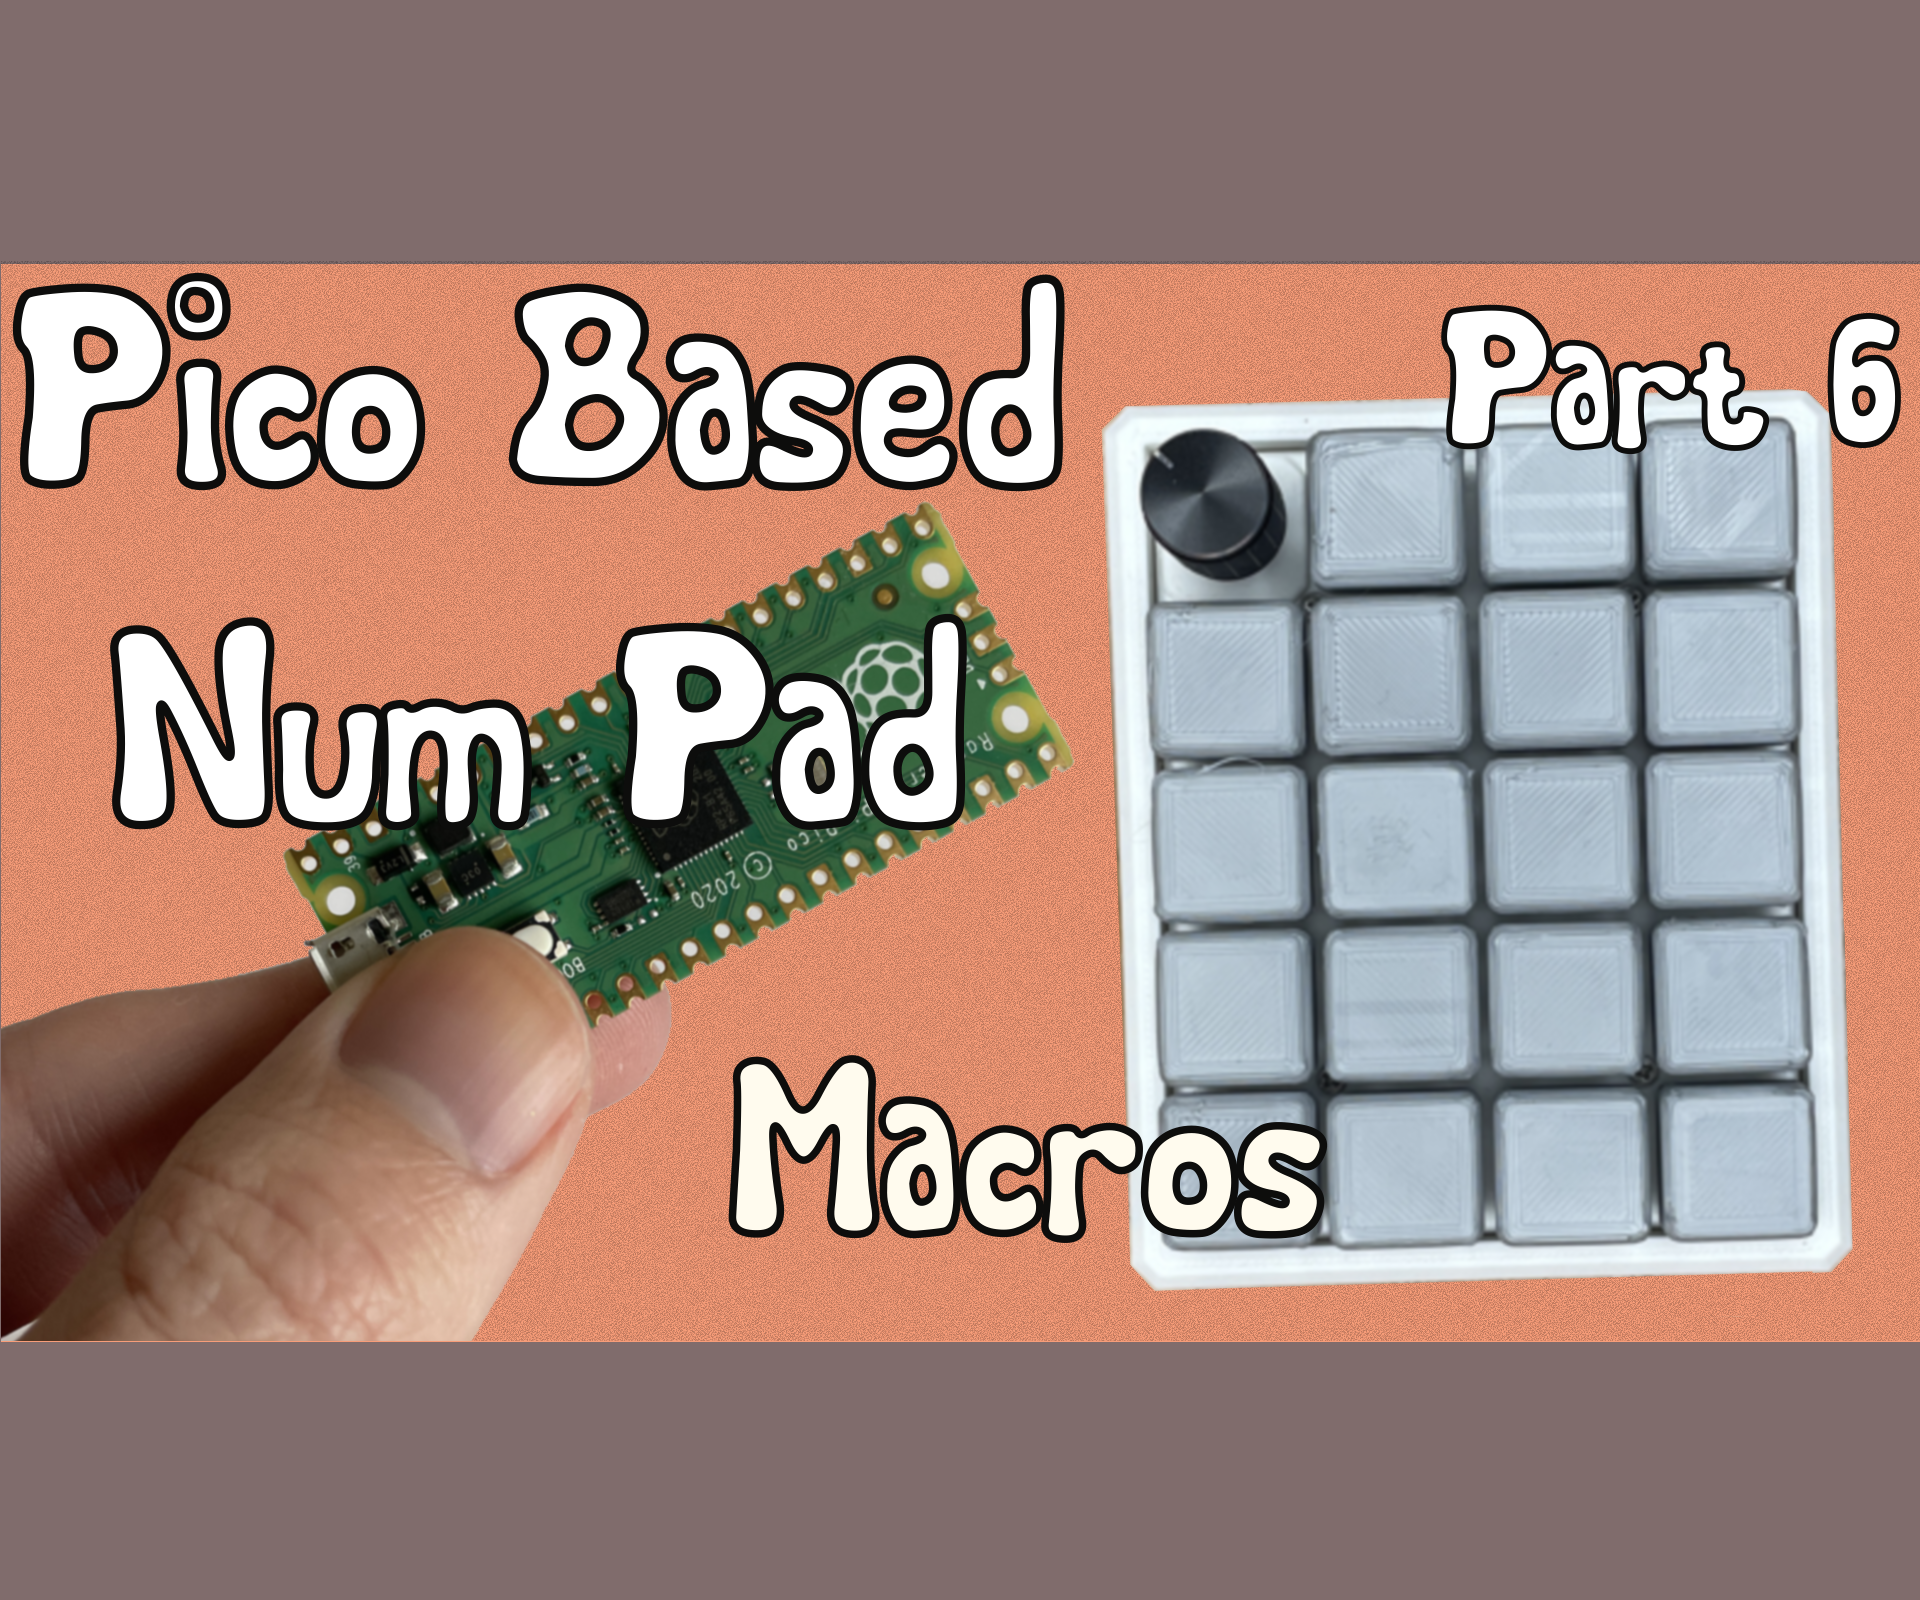 Pico Powered Number Pad - Part 6 - Macros